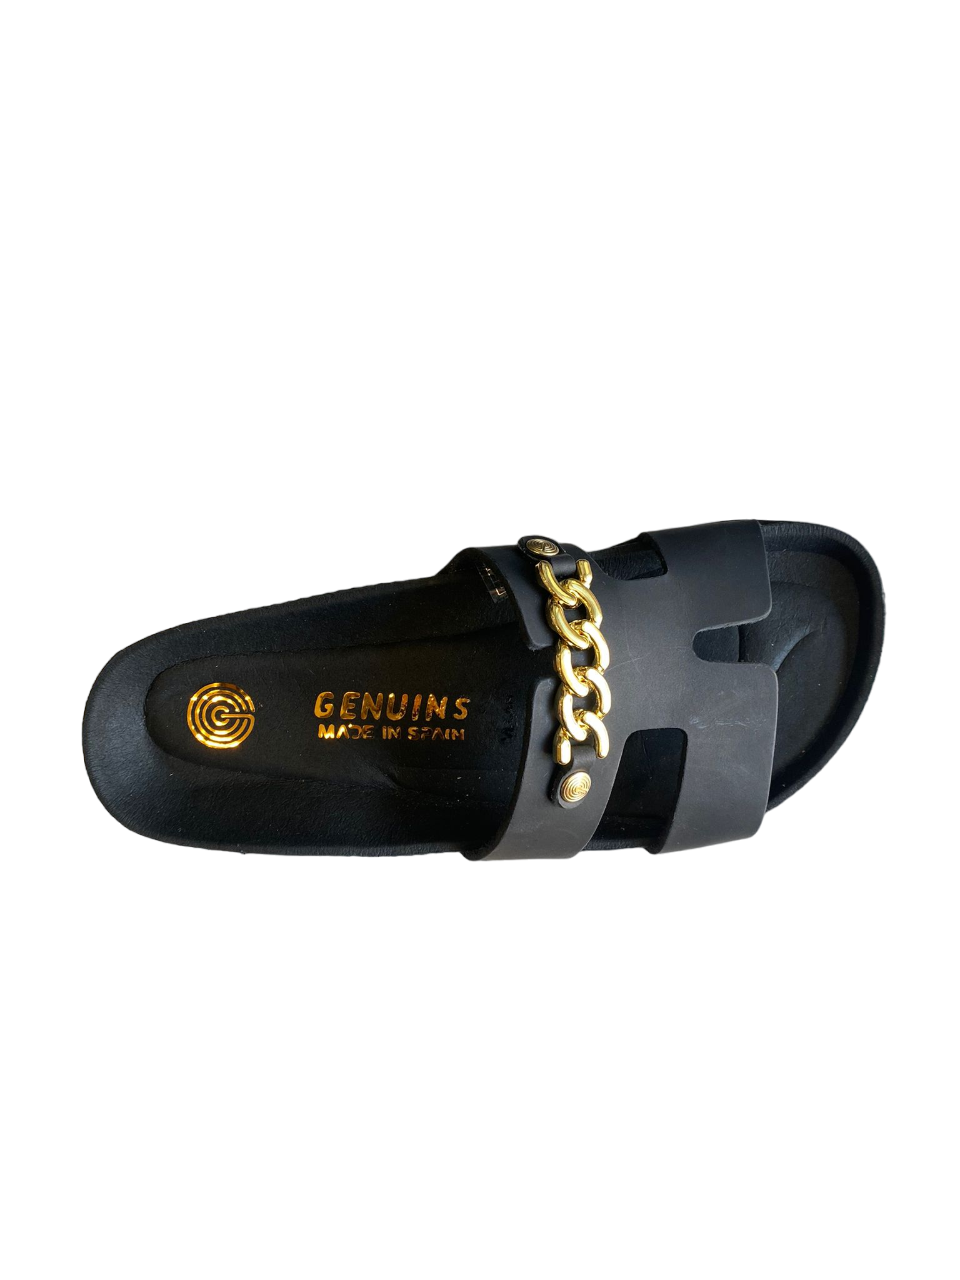 Genuins sandalo da donna Hilton Oiled Leather G103895 black